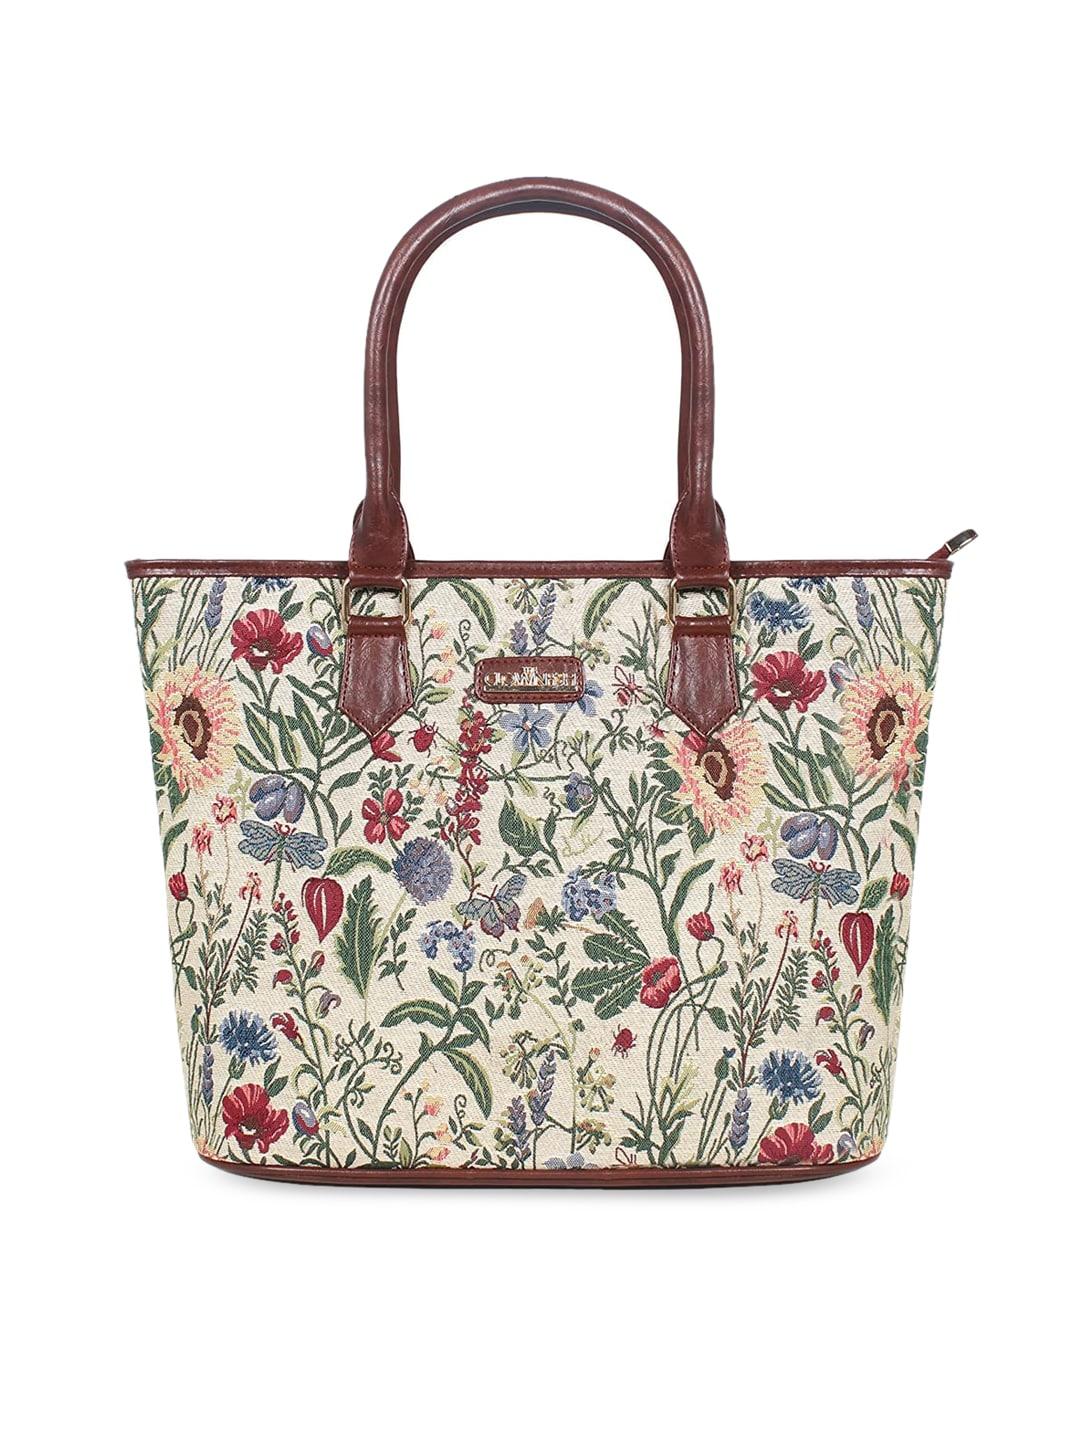 THE CLOWNFISH Beige & Brown Floral Printed Oversized Handbag